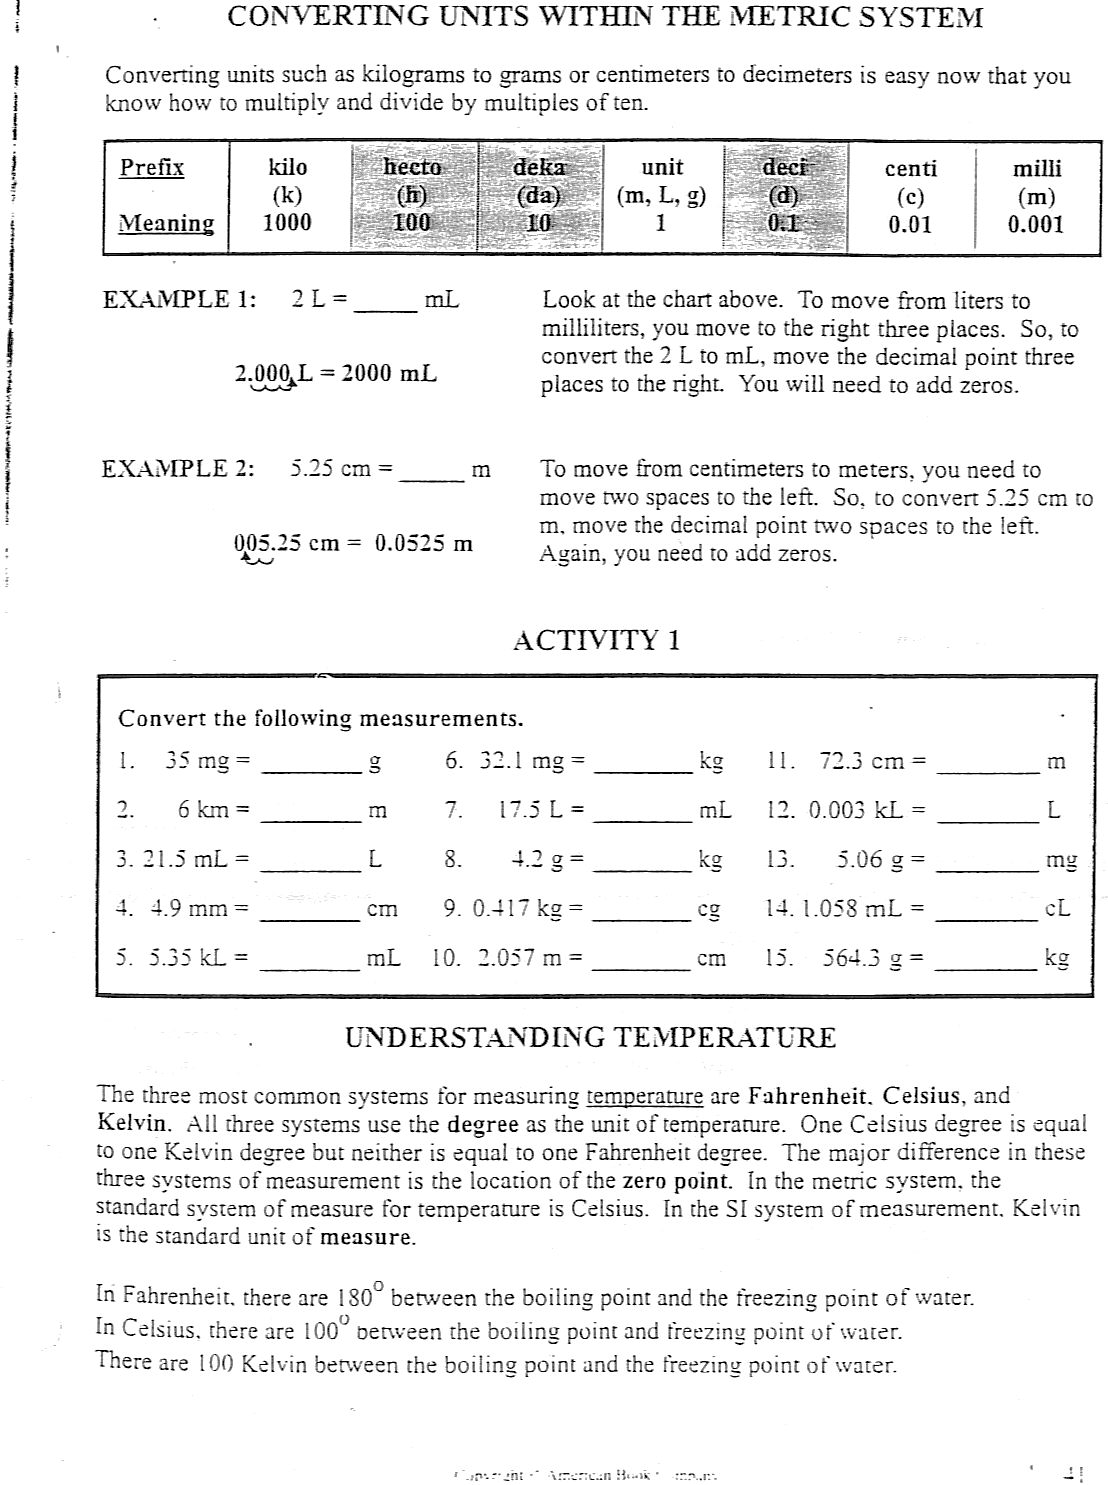 Metric Conversion Worksheets High School Image